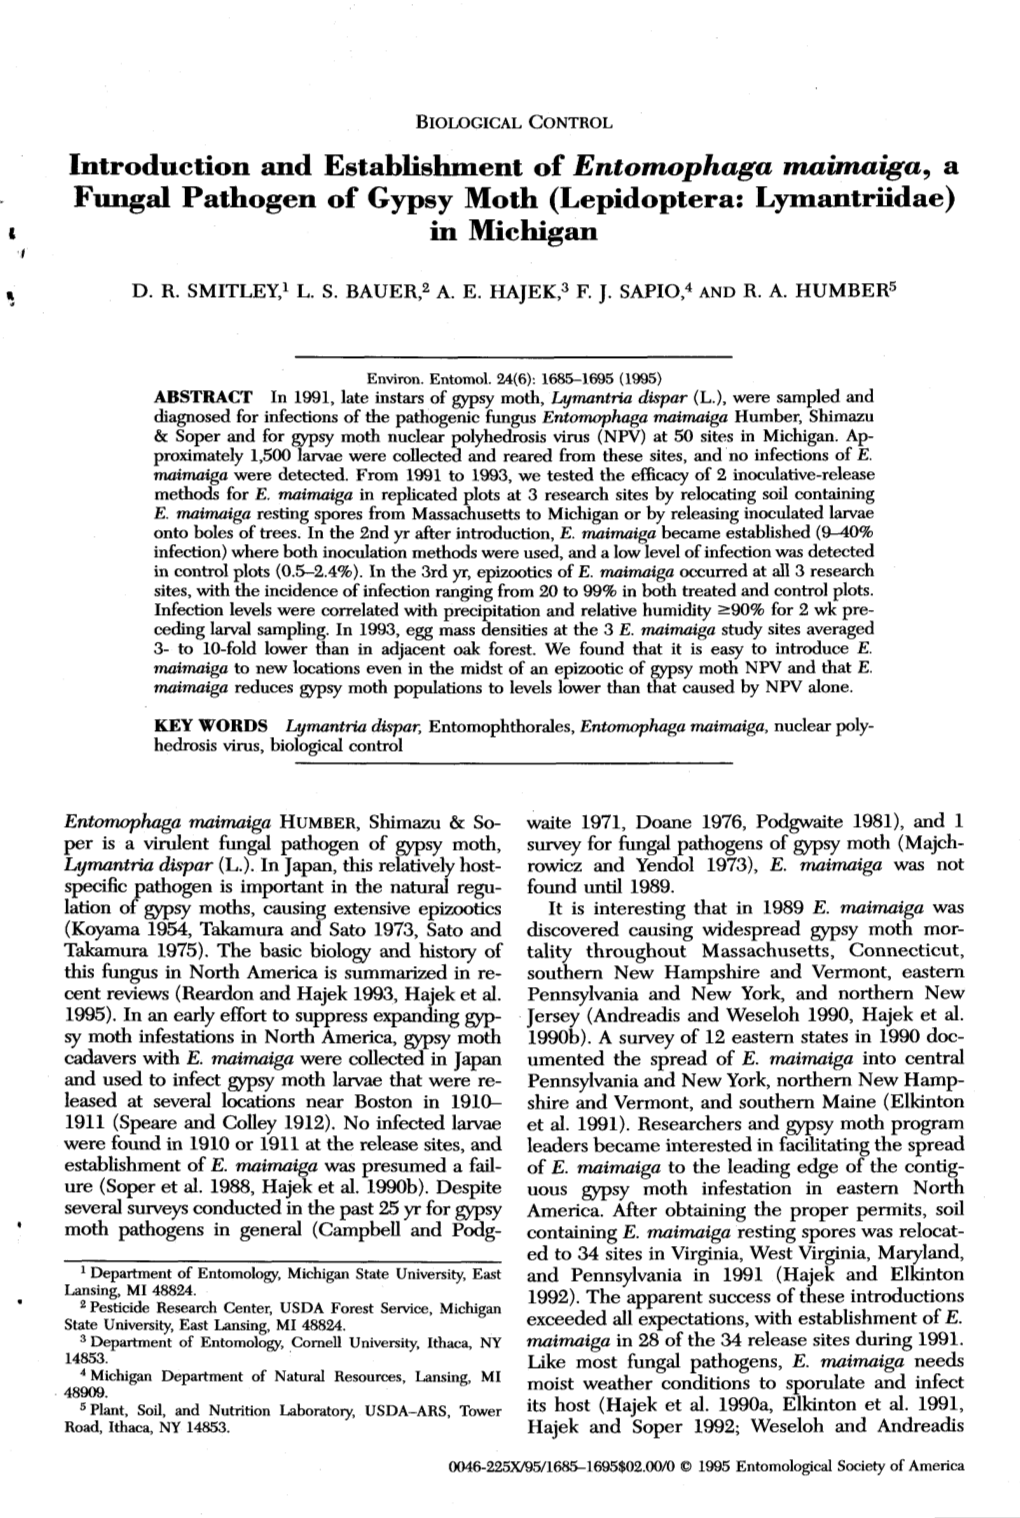 Introduction and Establishment of Entomophaga Maimaiga, a Fungal Pathogen of Gypsy Moth (Lepidoptera: Lyrnantriidae) in Michigan